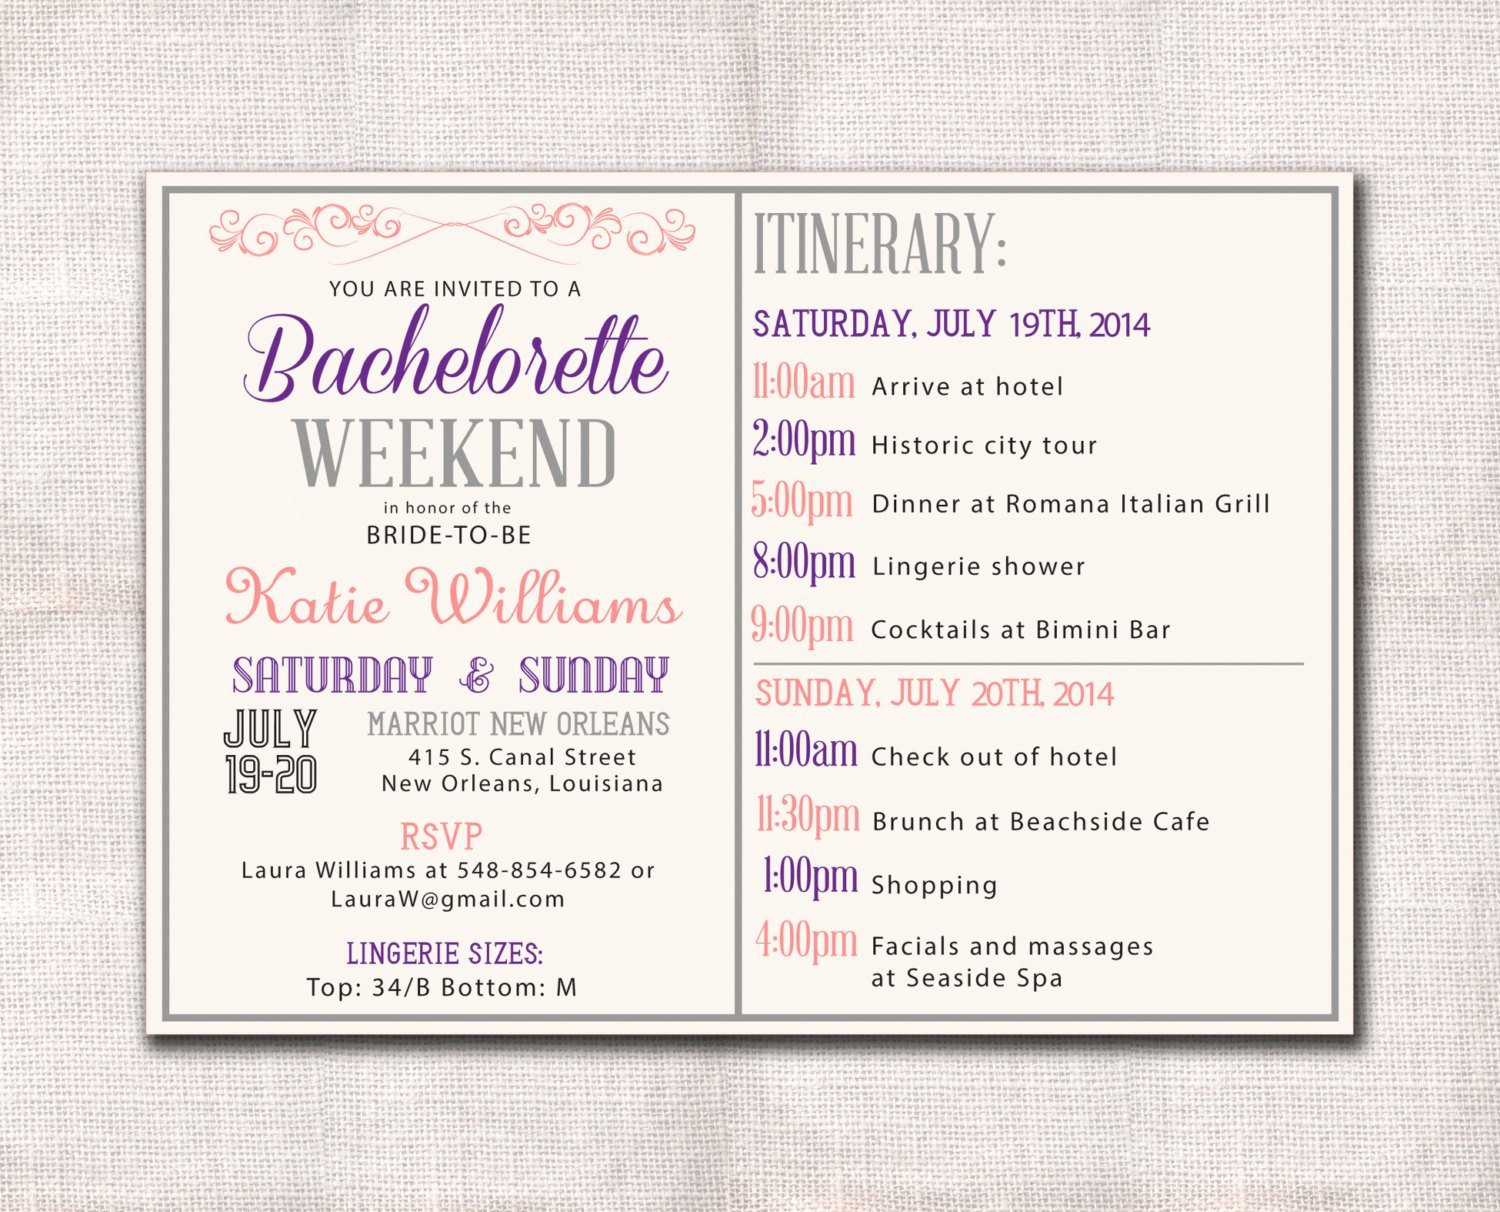 Bachelorette Weekend Itinerary Template Fresh Bachelorette Party Weekend Invitation and Itinerary Custom